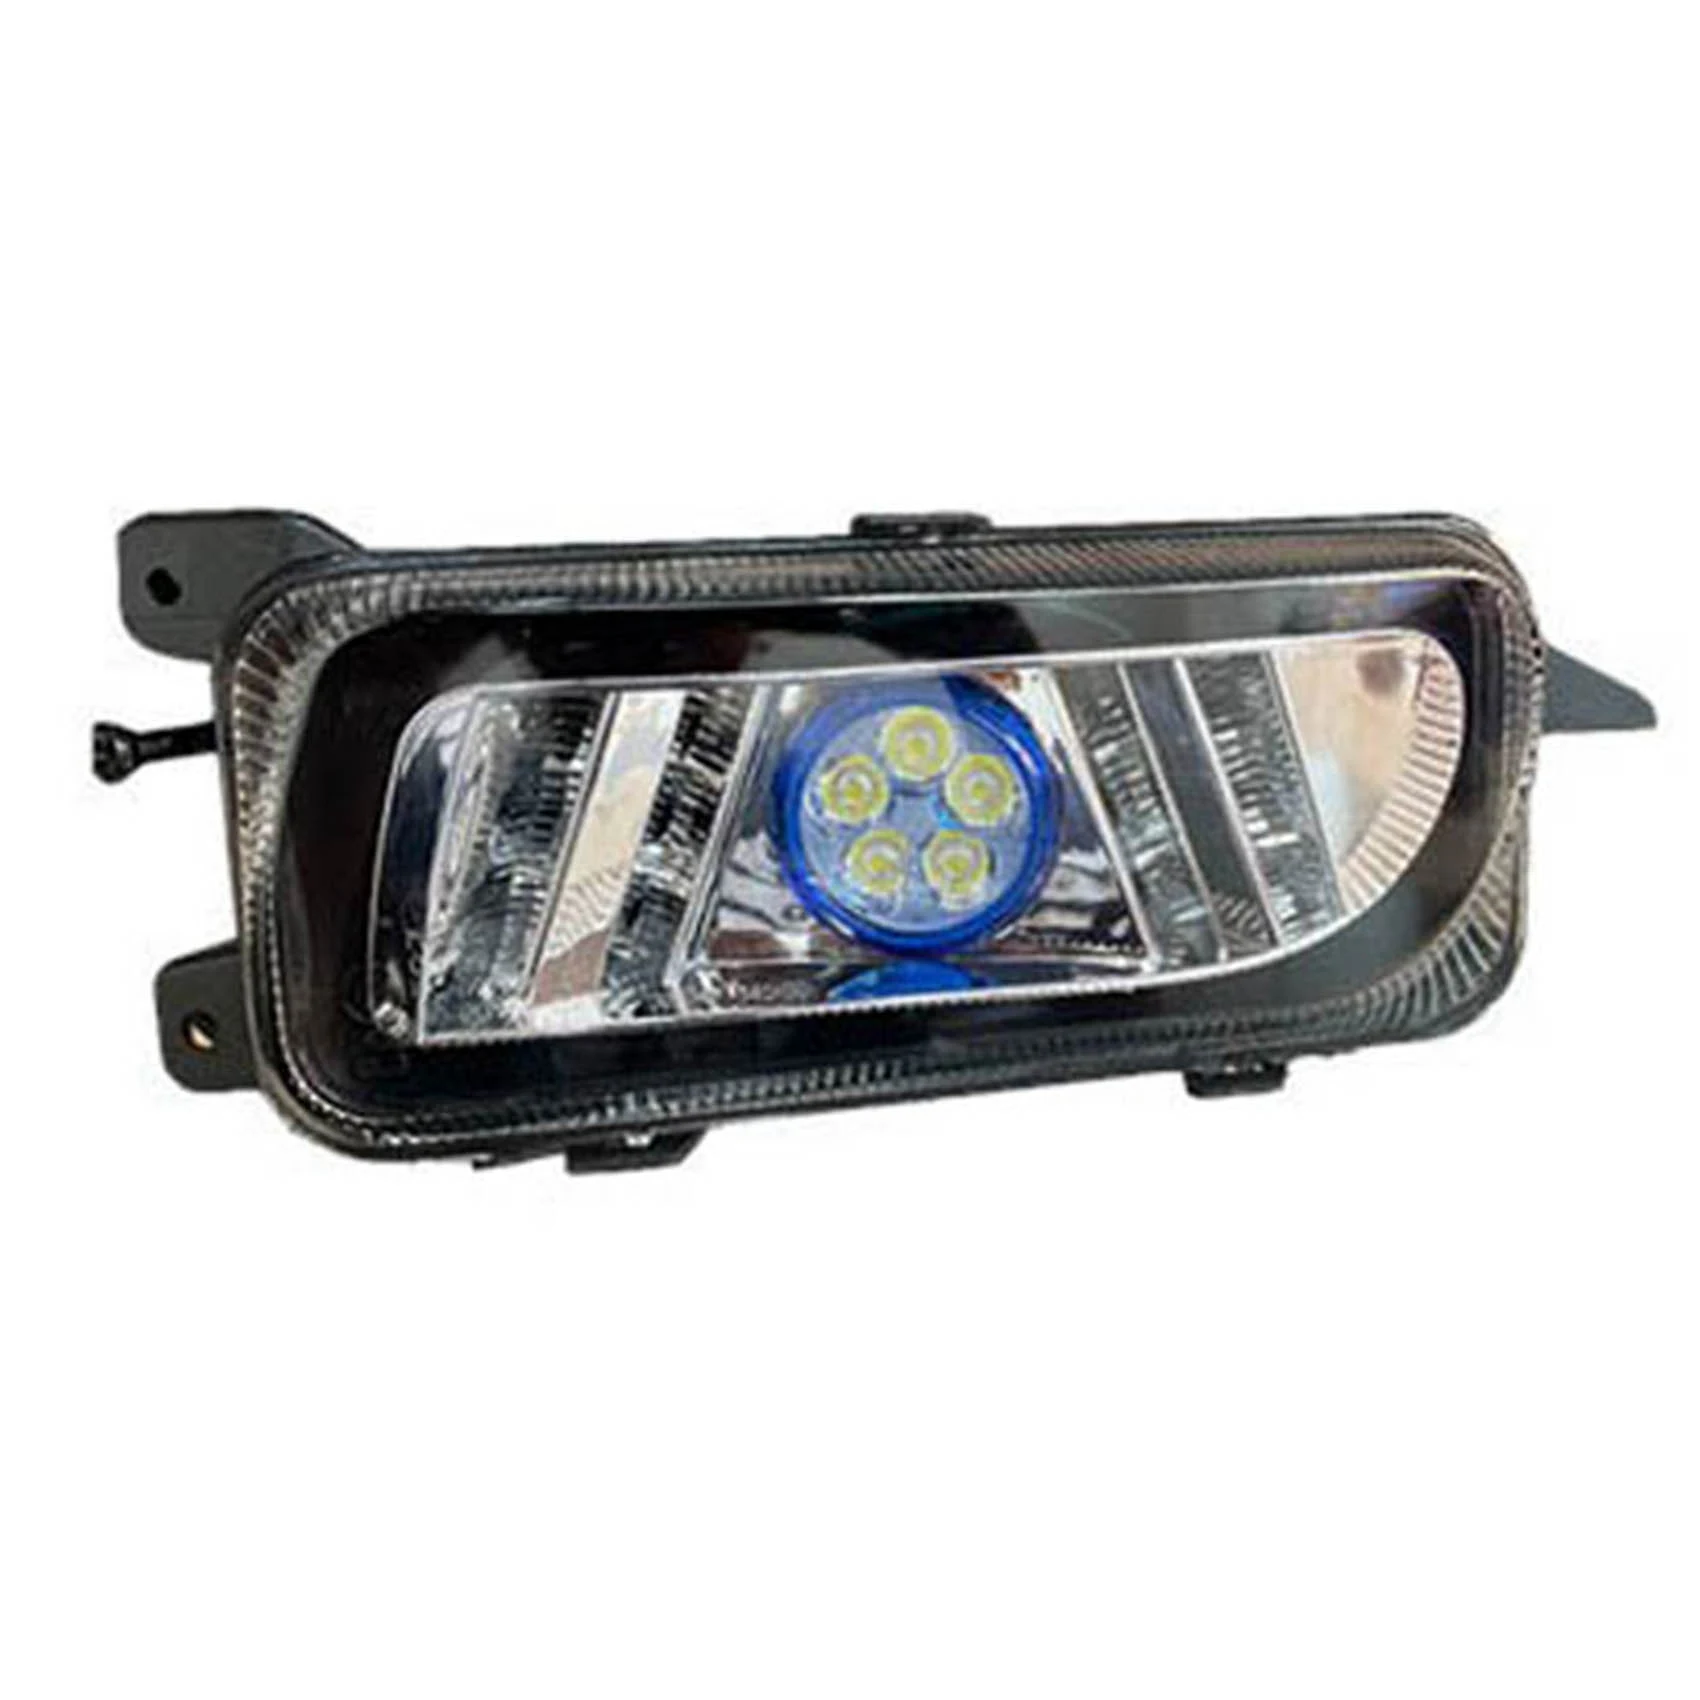 

Front Left LED Fog Lamp Daytime Running Lights for Benz Actros MP2 MP3 Truck 9438200156 9438200056